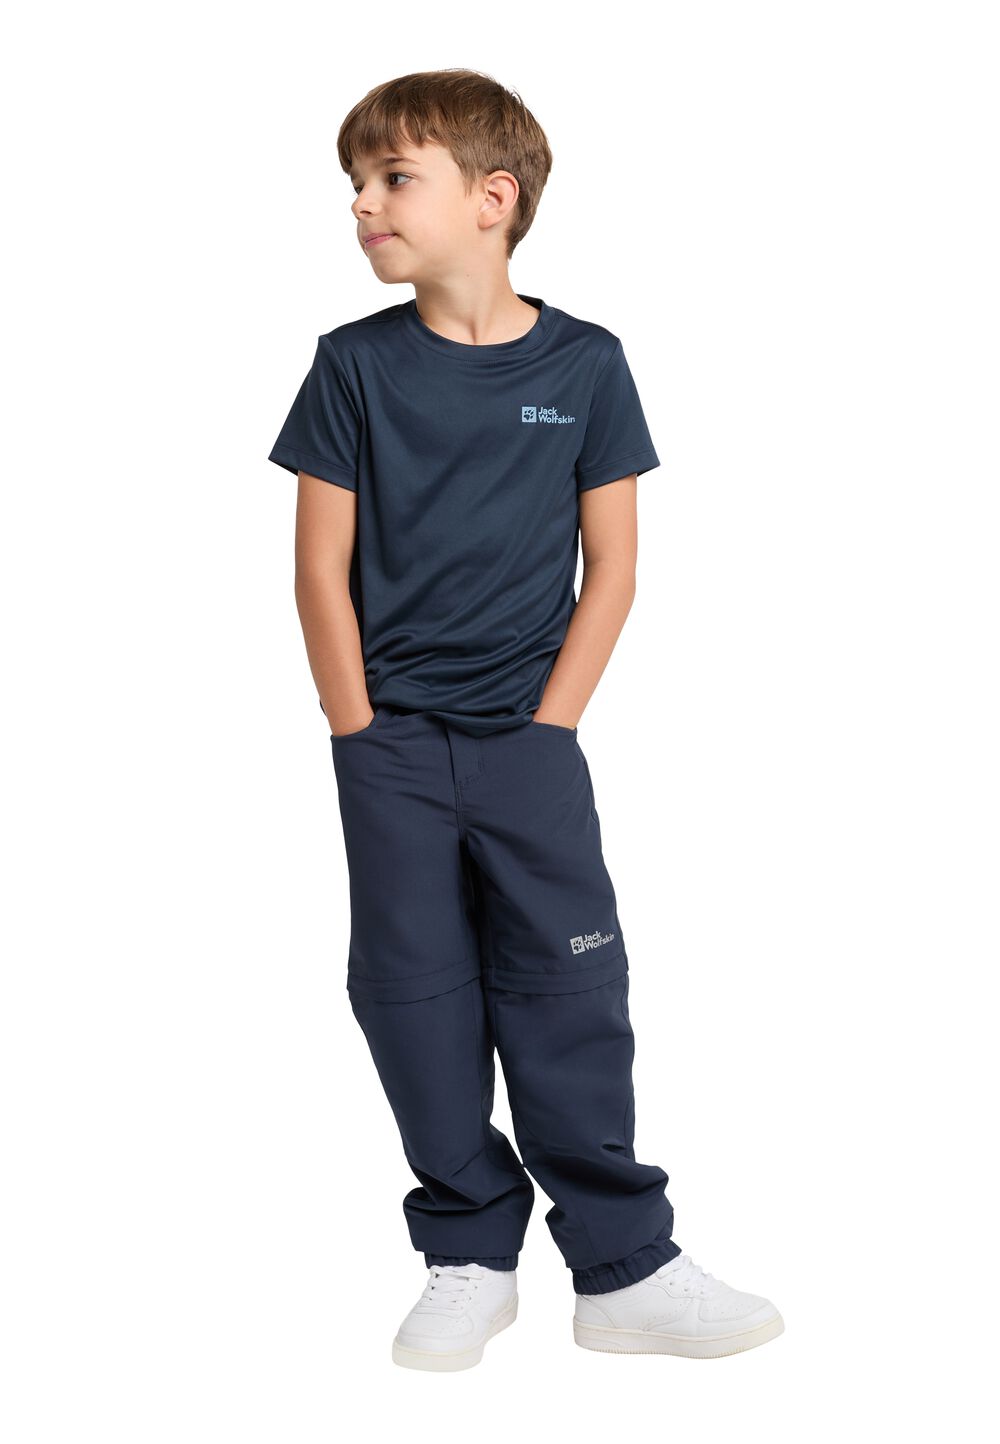 Jack Wolfskin Active Solid T-Shirt Kids Functioneel shirt Kinderen 176 blue night blue